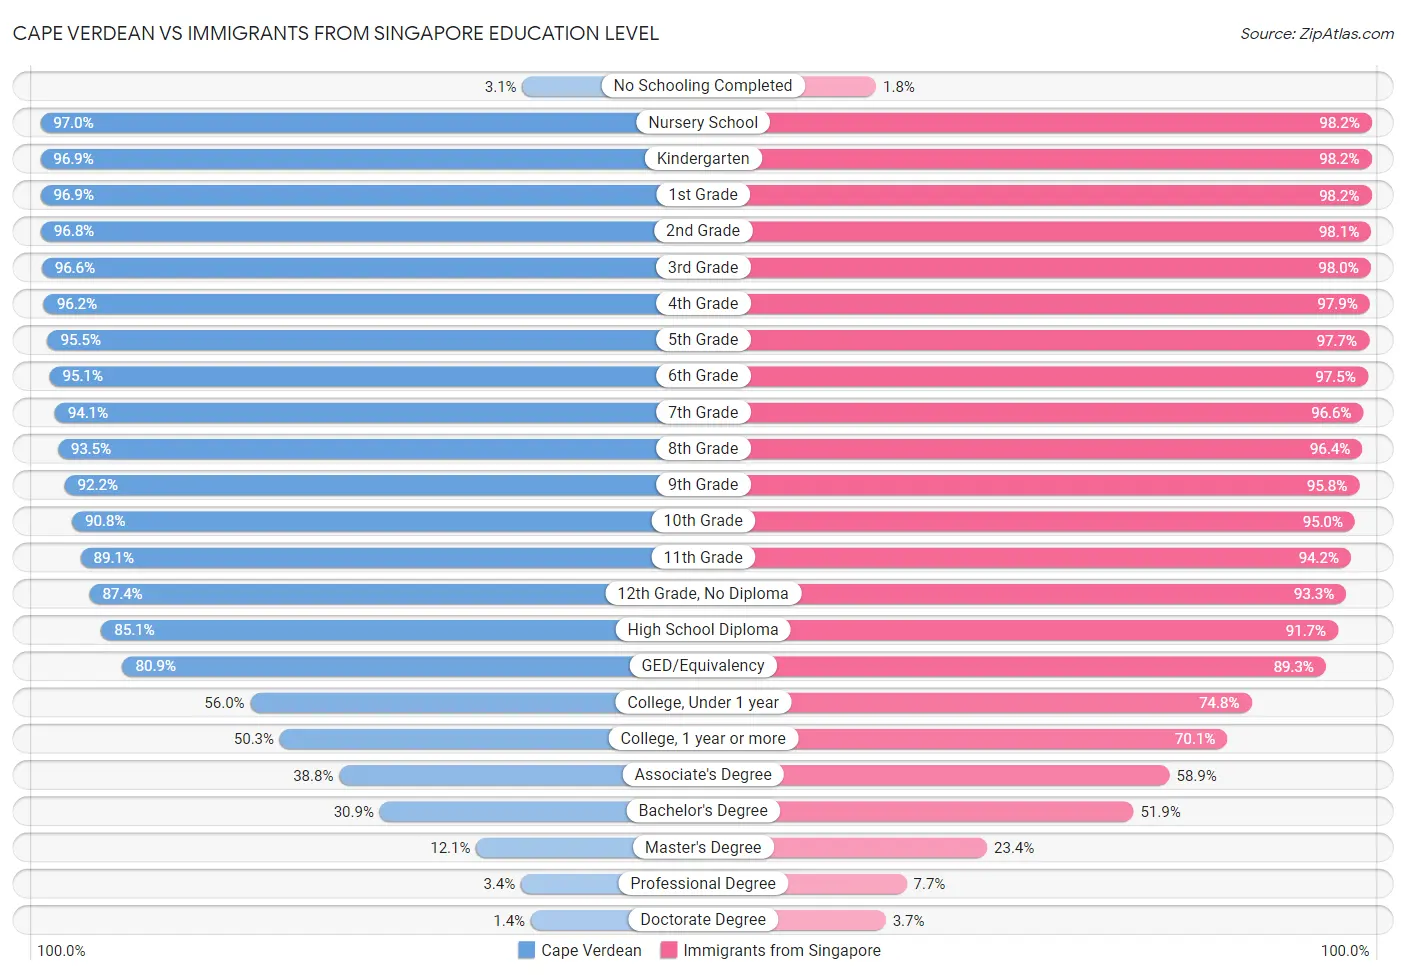 Cape Verdean vs Immigrants from Singapore Education Level